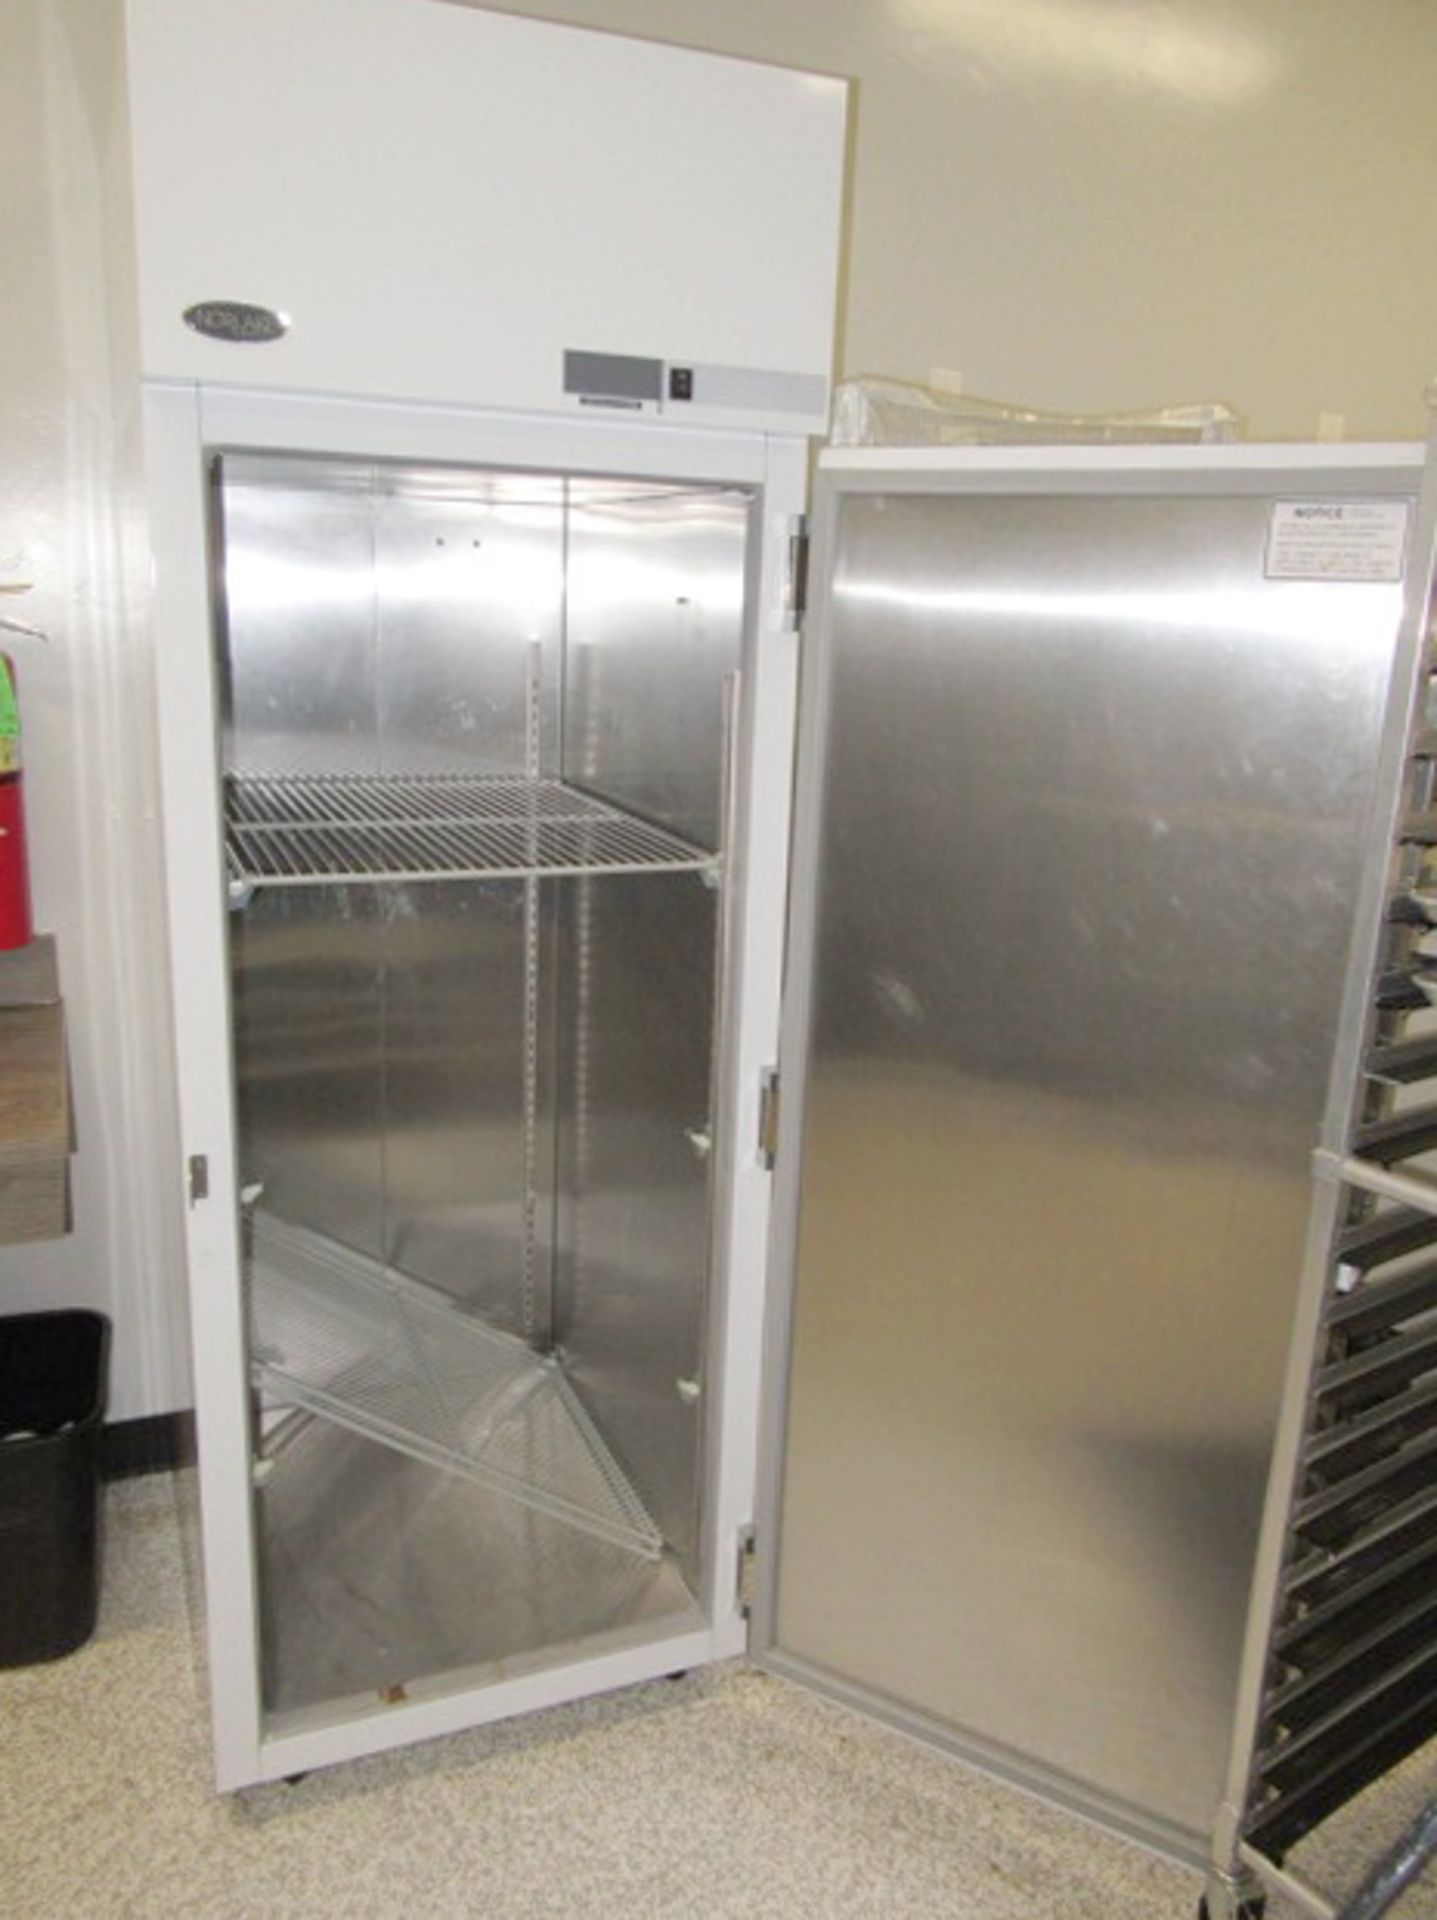 Norlake Scientific Refrigerator - Image 2 of 3